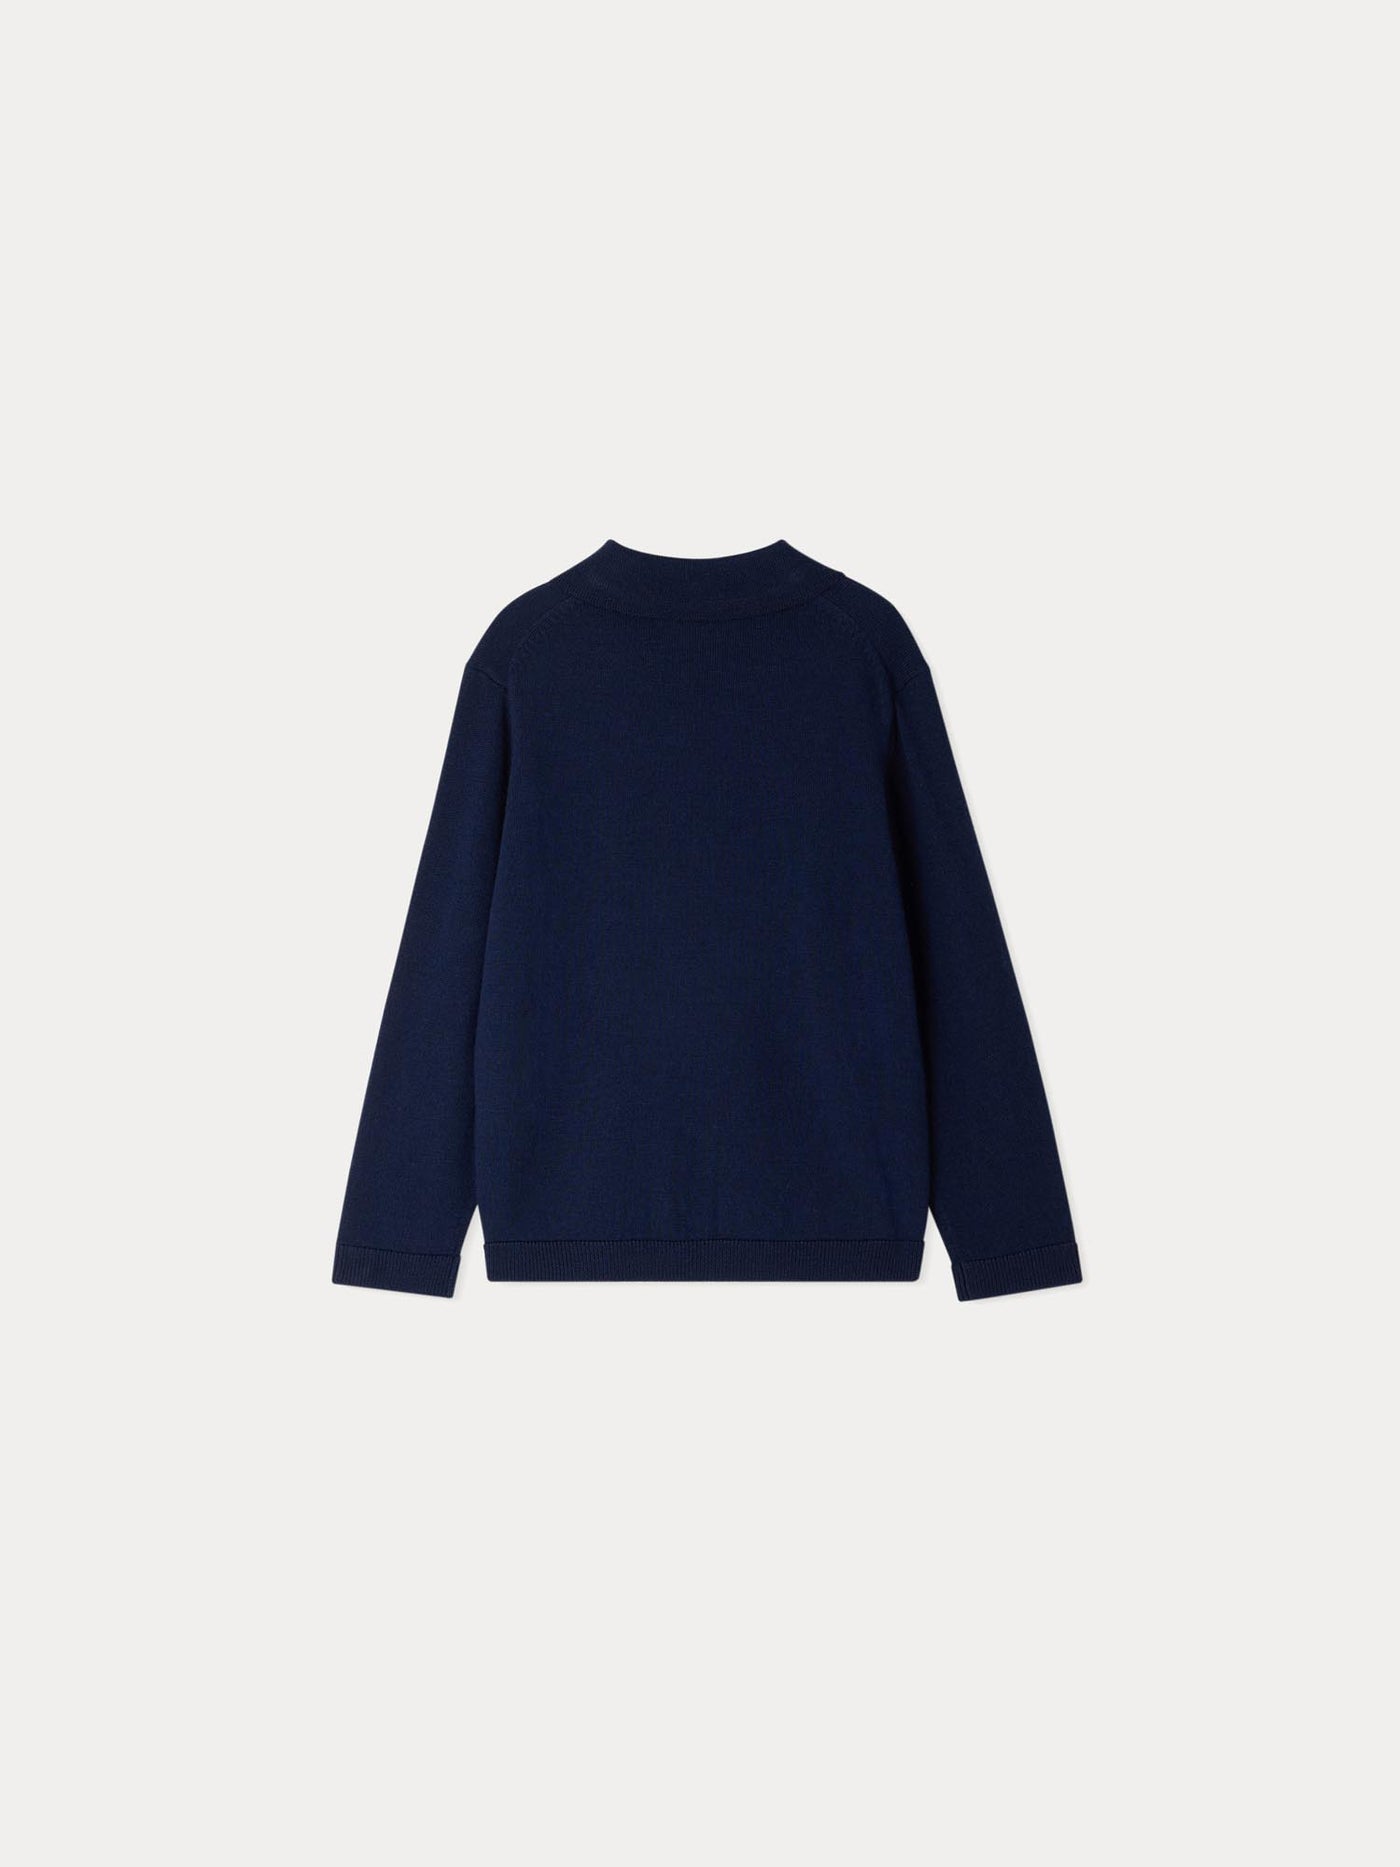 Darius dark blue wool sweater